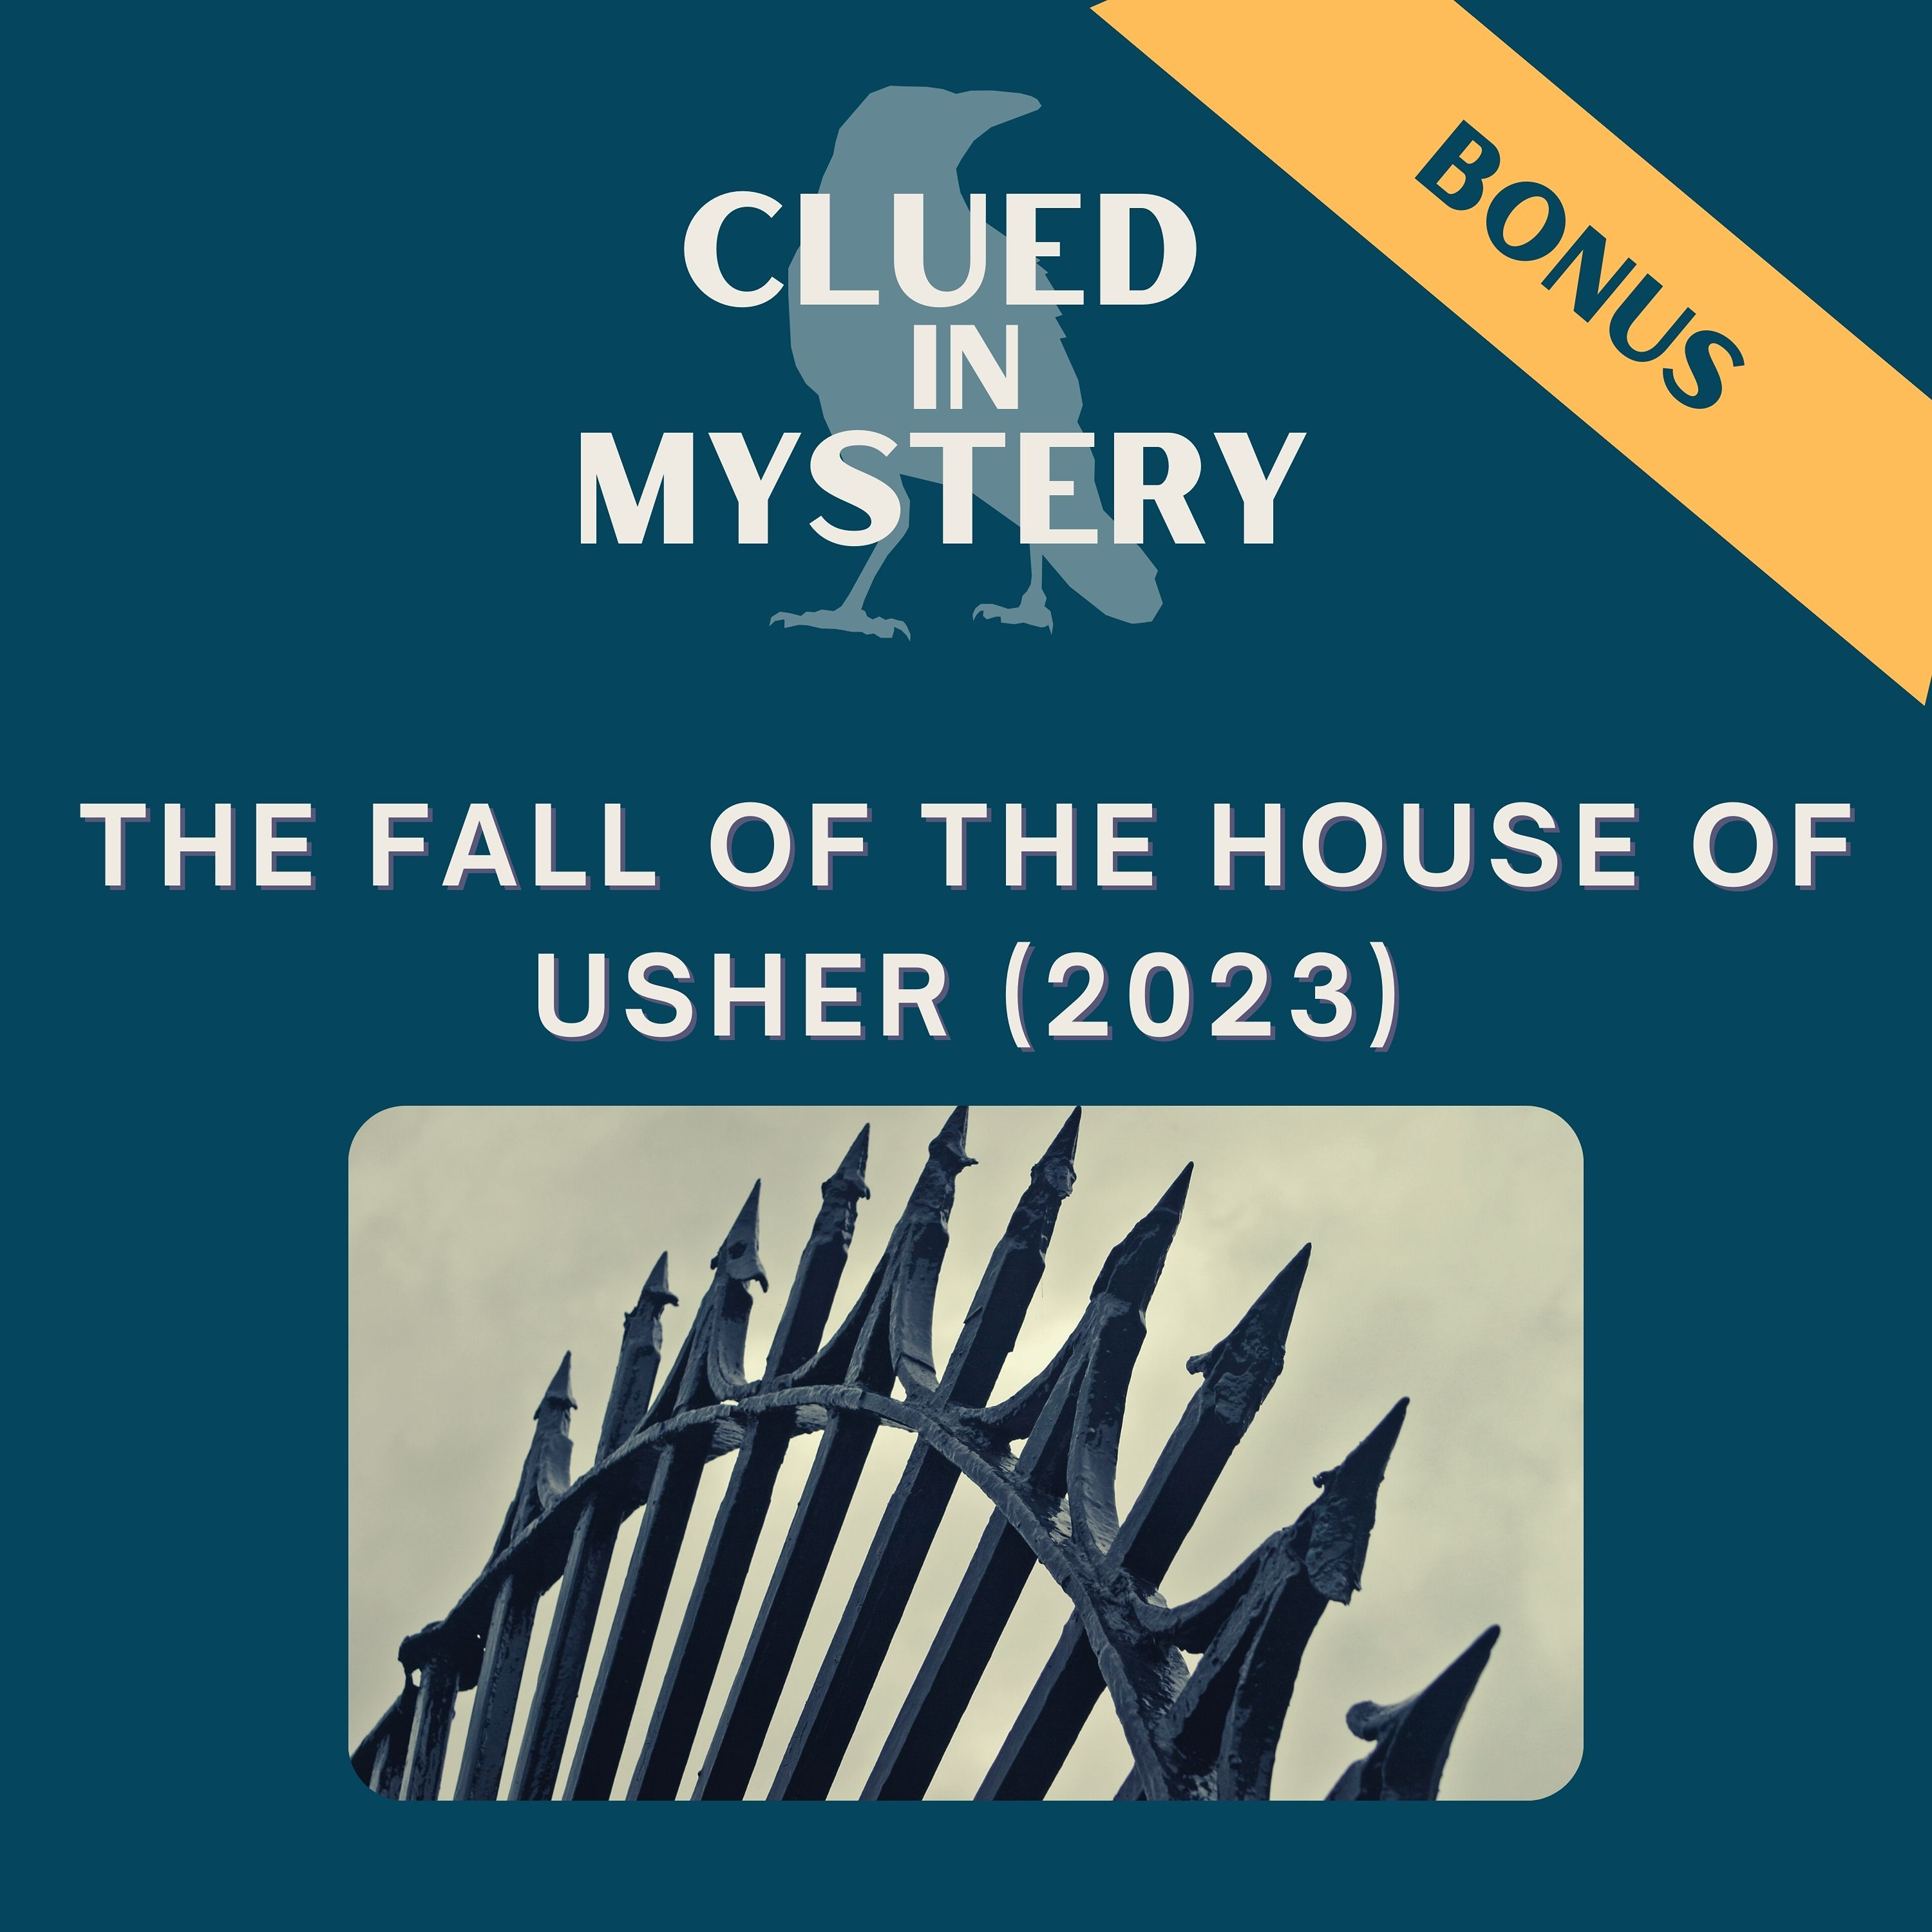 [BONUS] The Fall of the House of Usher